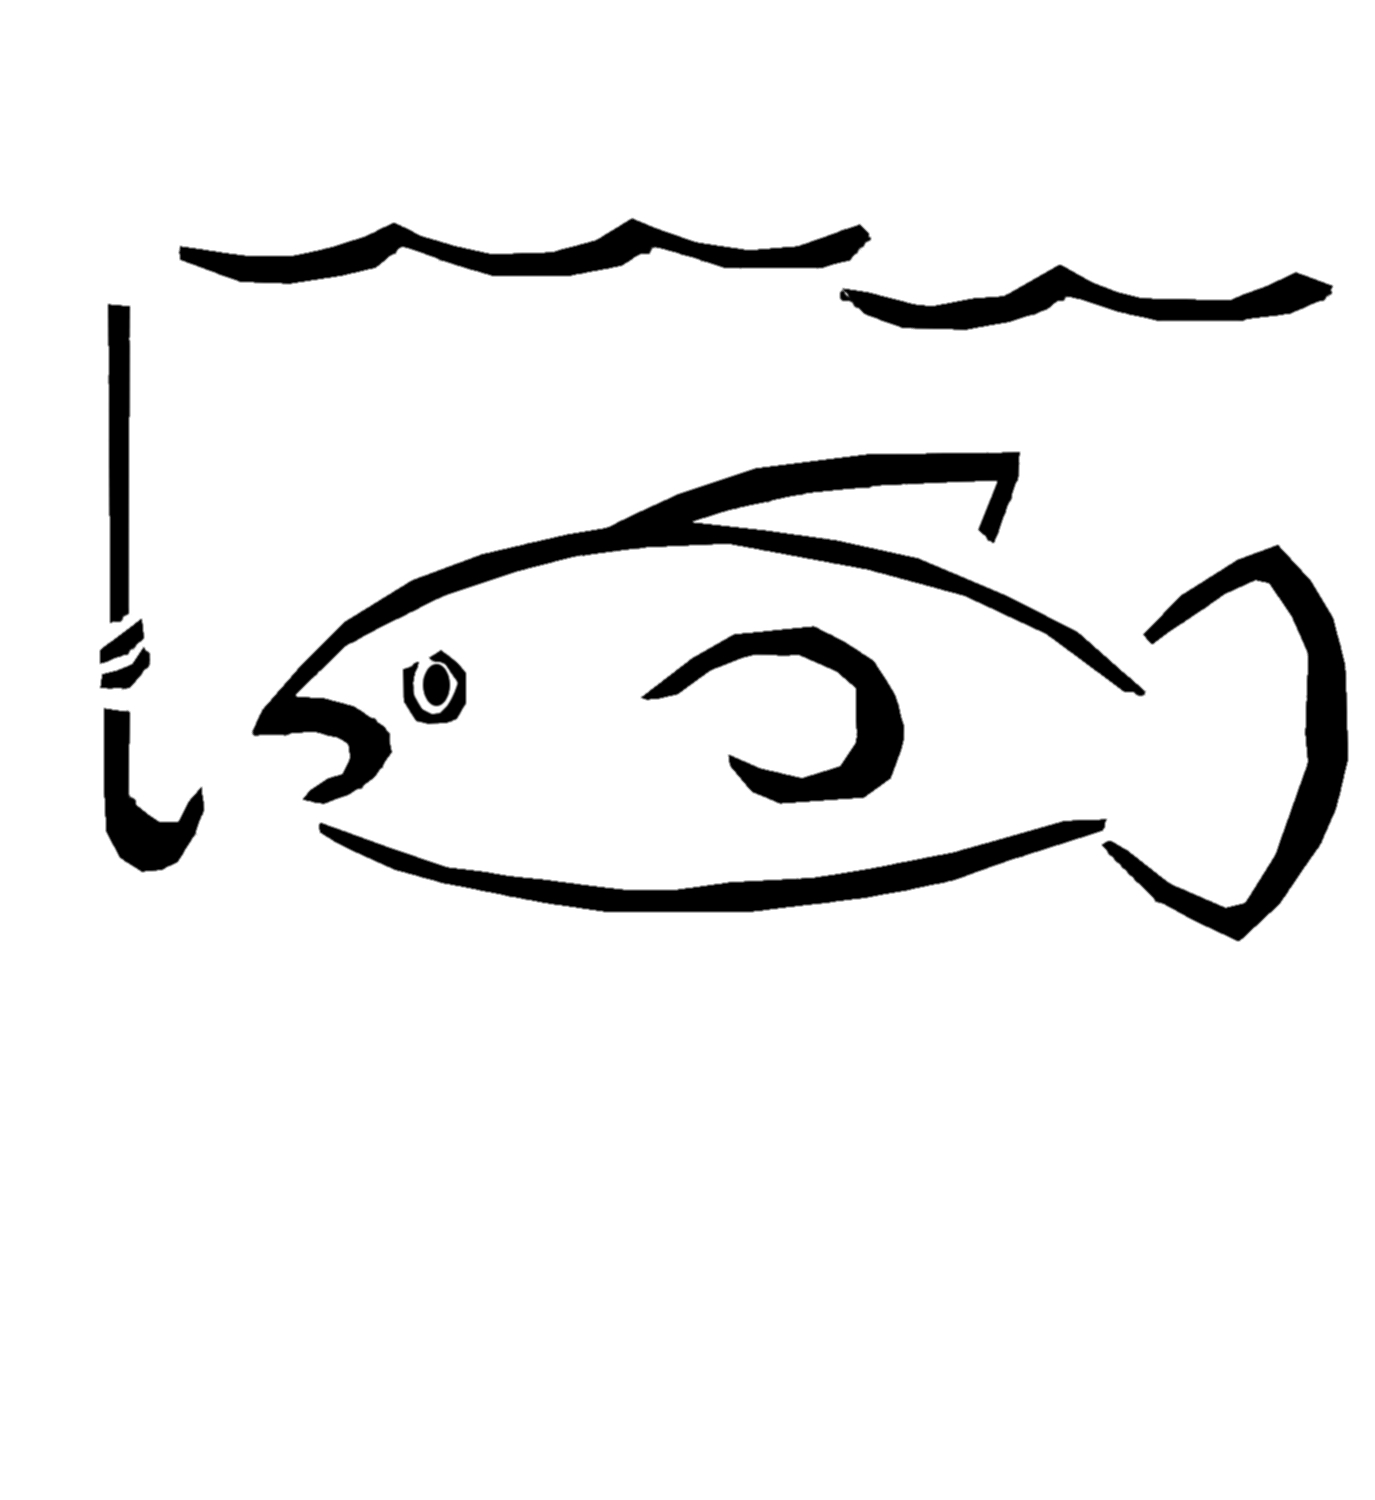 Fish Hook Clip Art - Clipart library